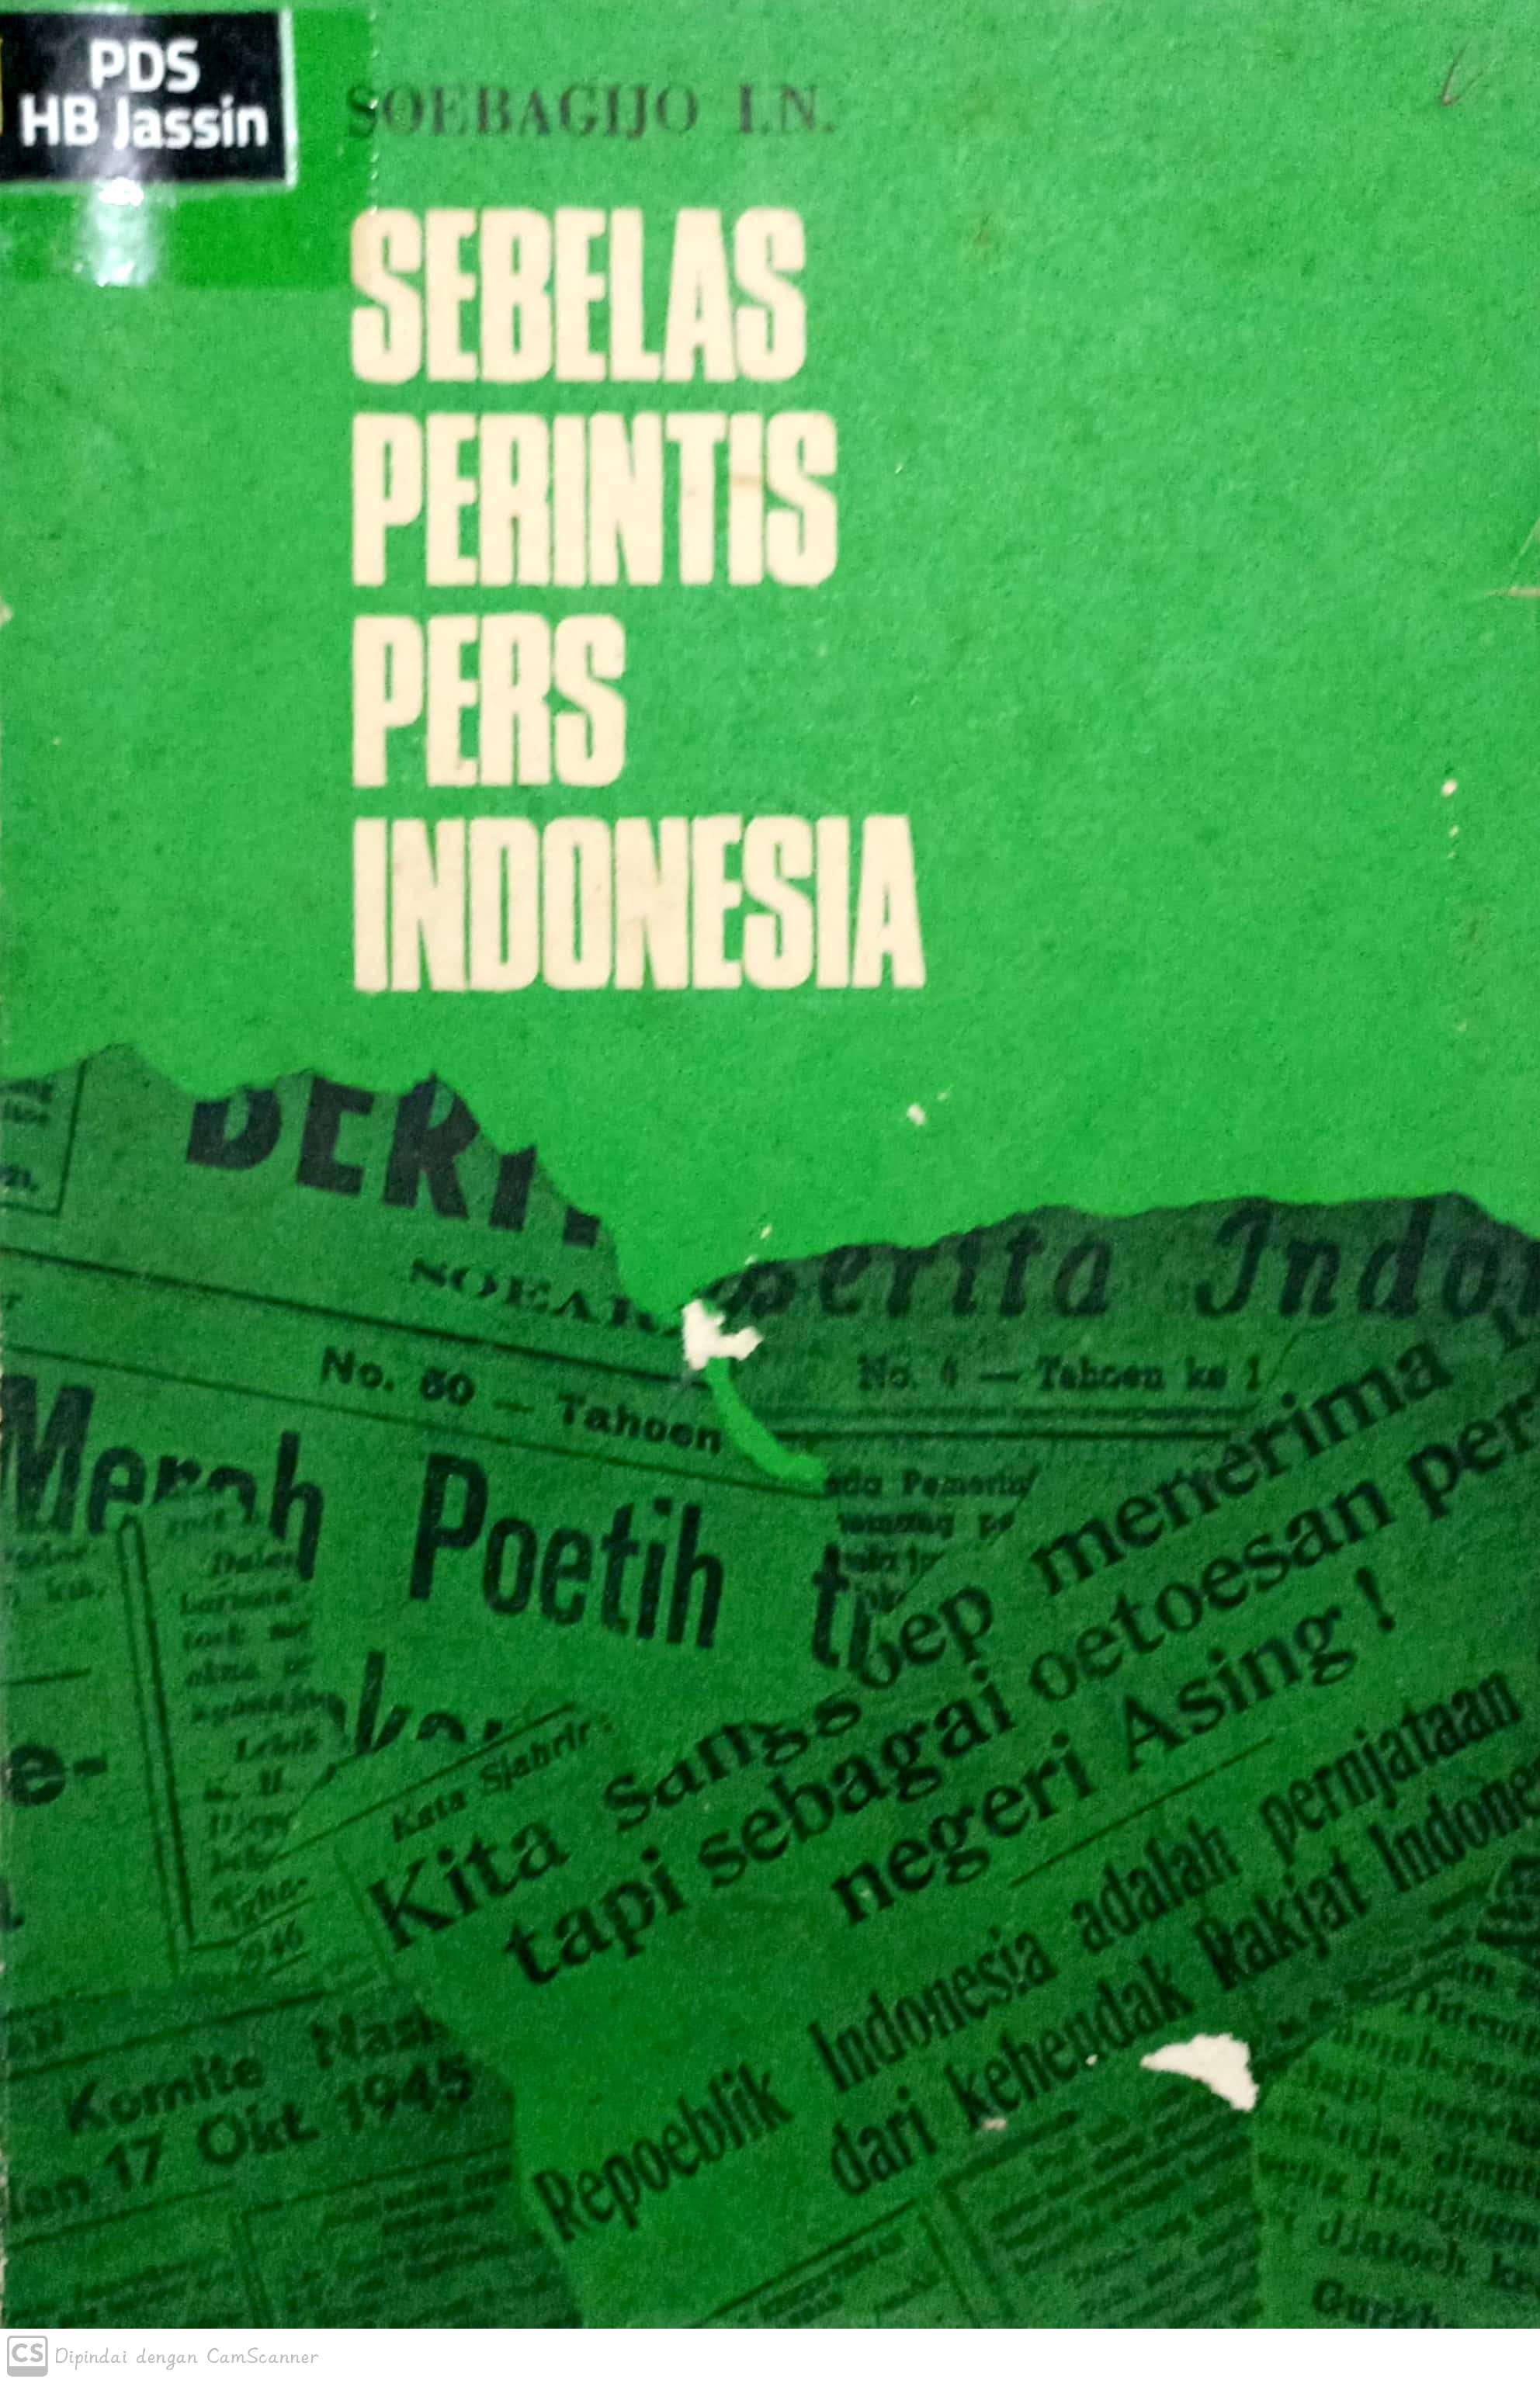 Sebelas Perintis Pers Indonesia